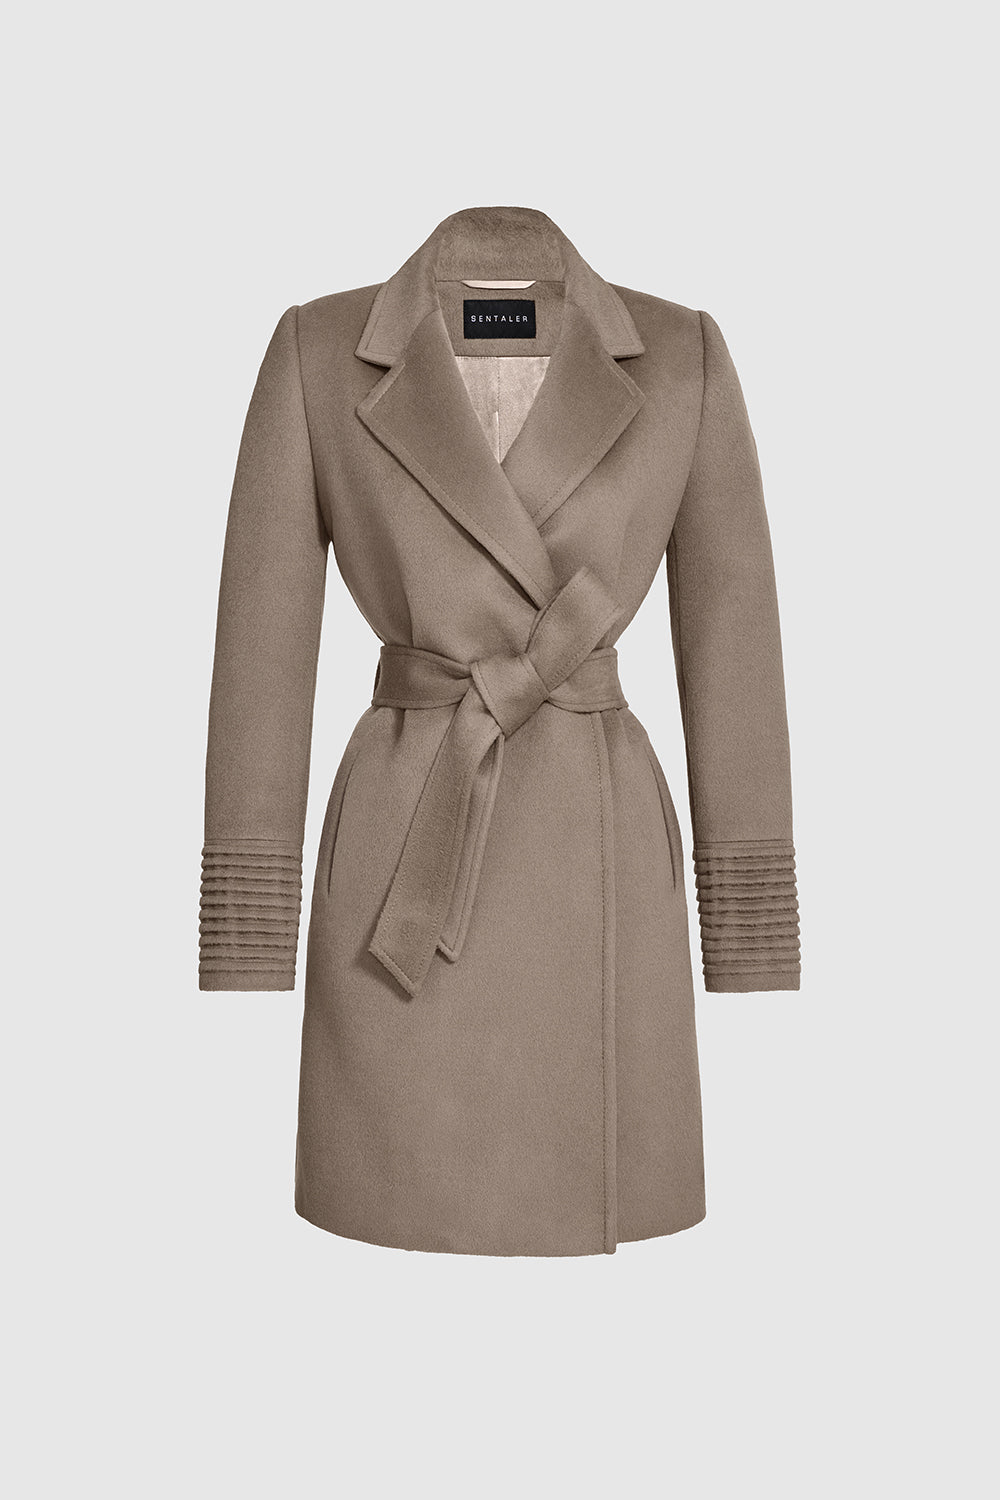 Louis Vuitton - Belted Double Face Hooded Wrap Coat - Camel - Women - Size: 38 - Luxury